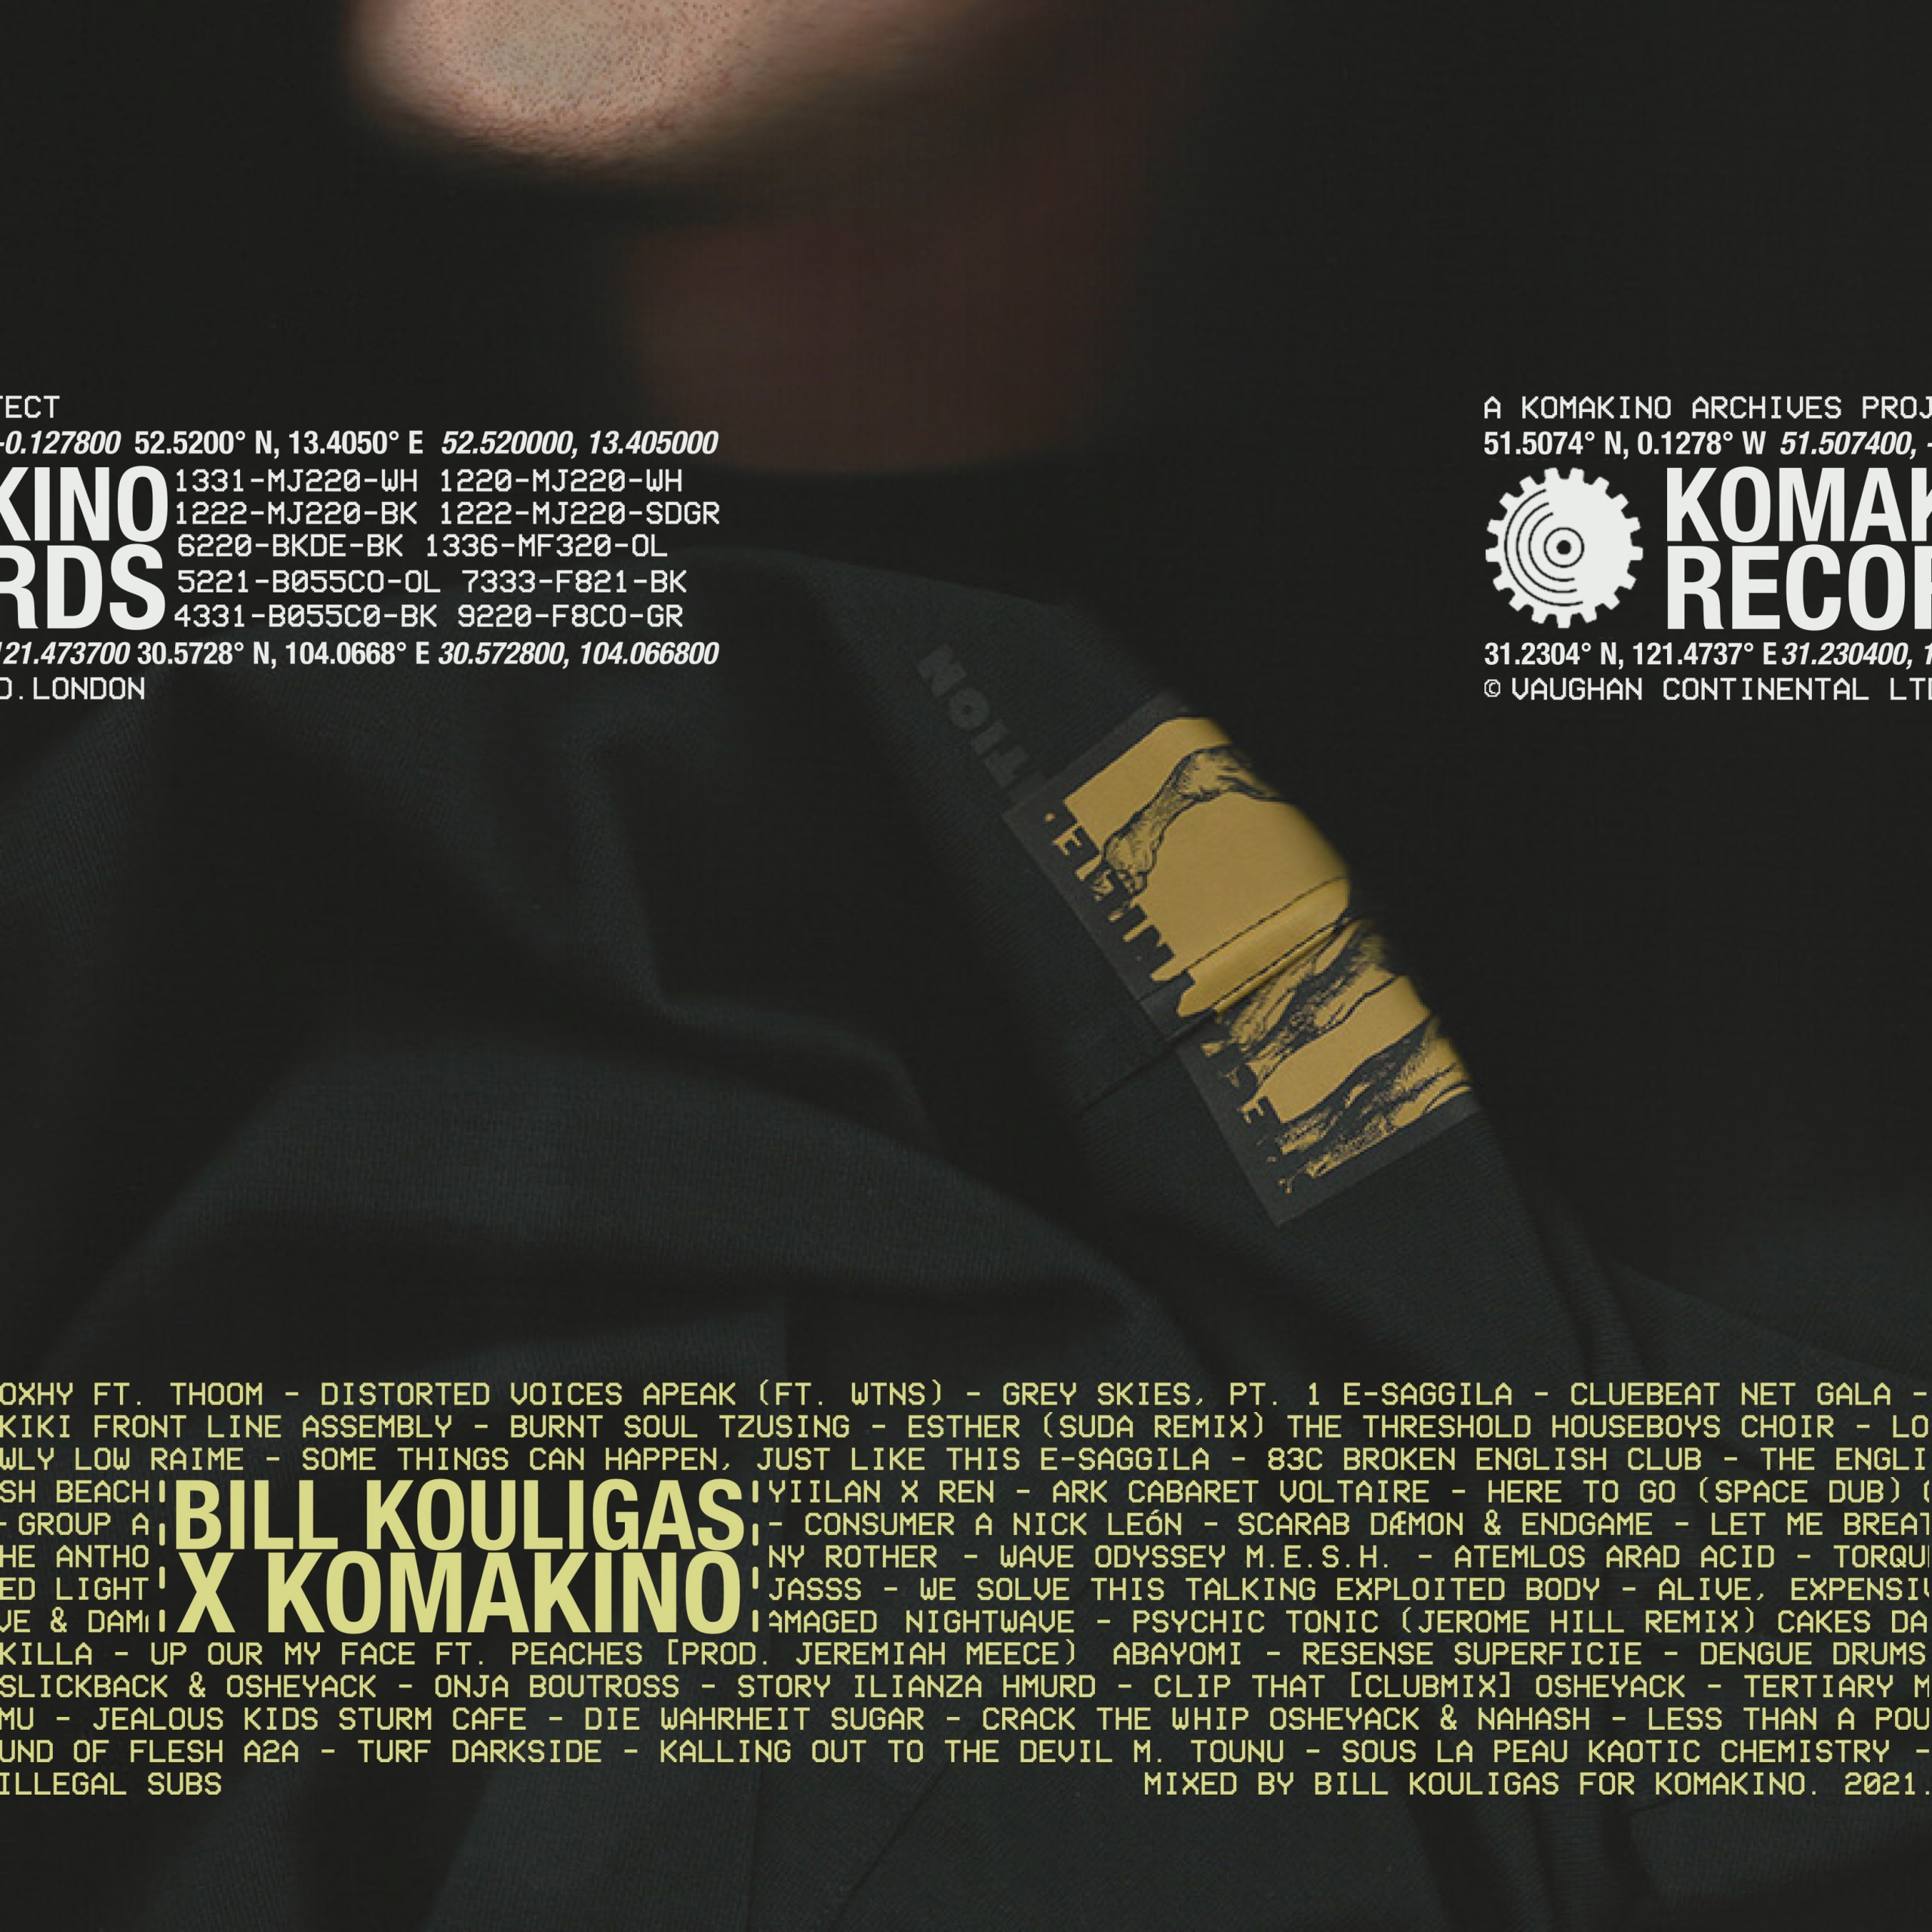 KOMAKINO RECORDS 